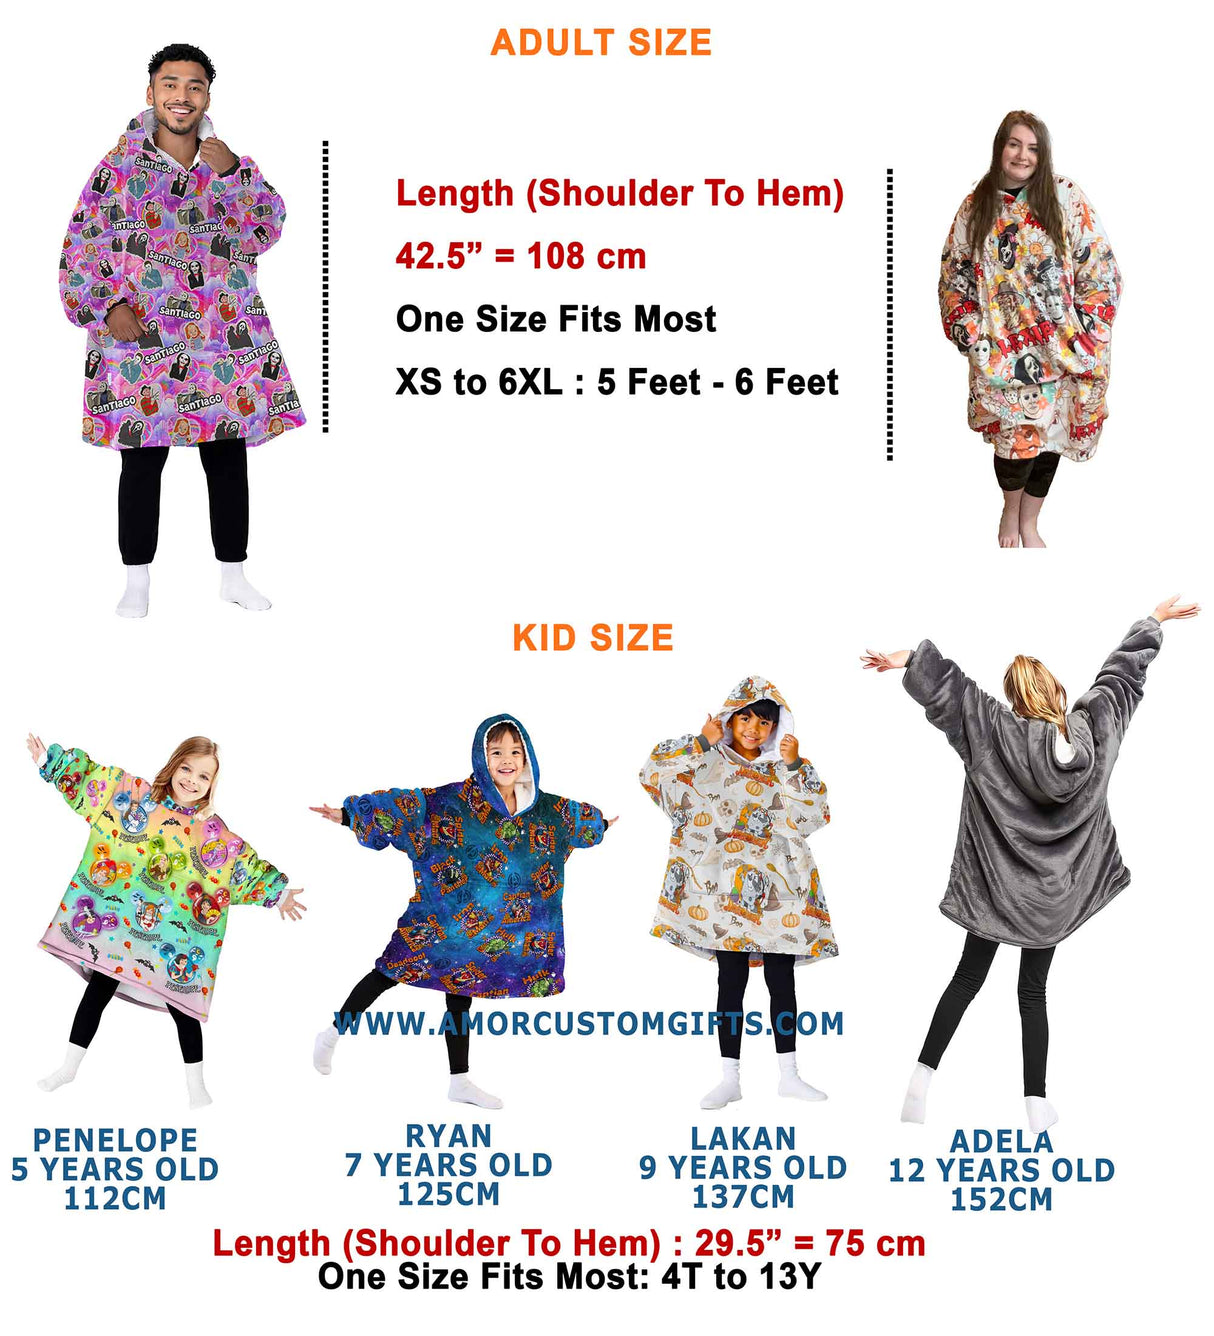 Personalized Snug Oversized Sherpa Wearable Tarot Card Halloween Horror Movie Characters Hoodie Blanket